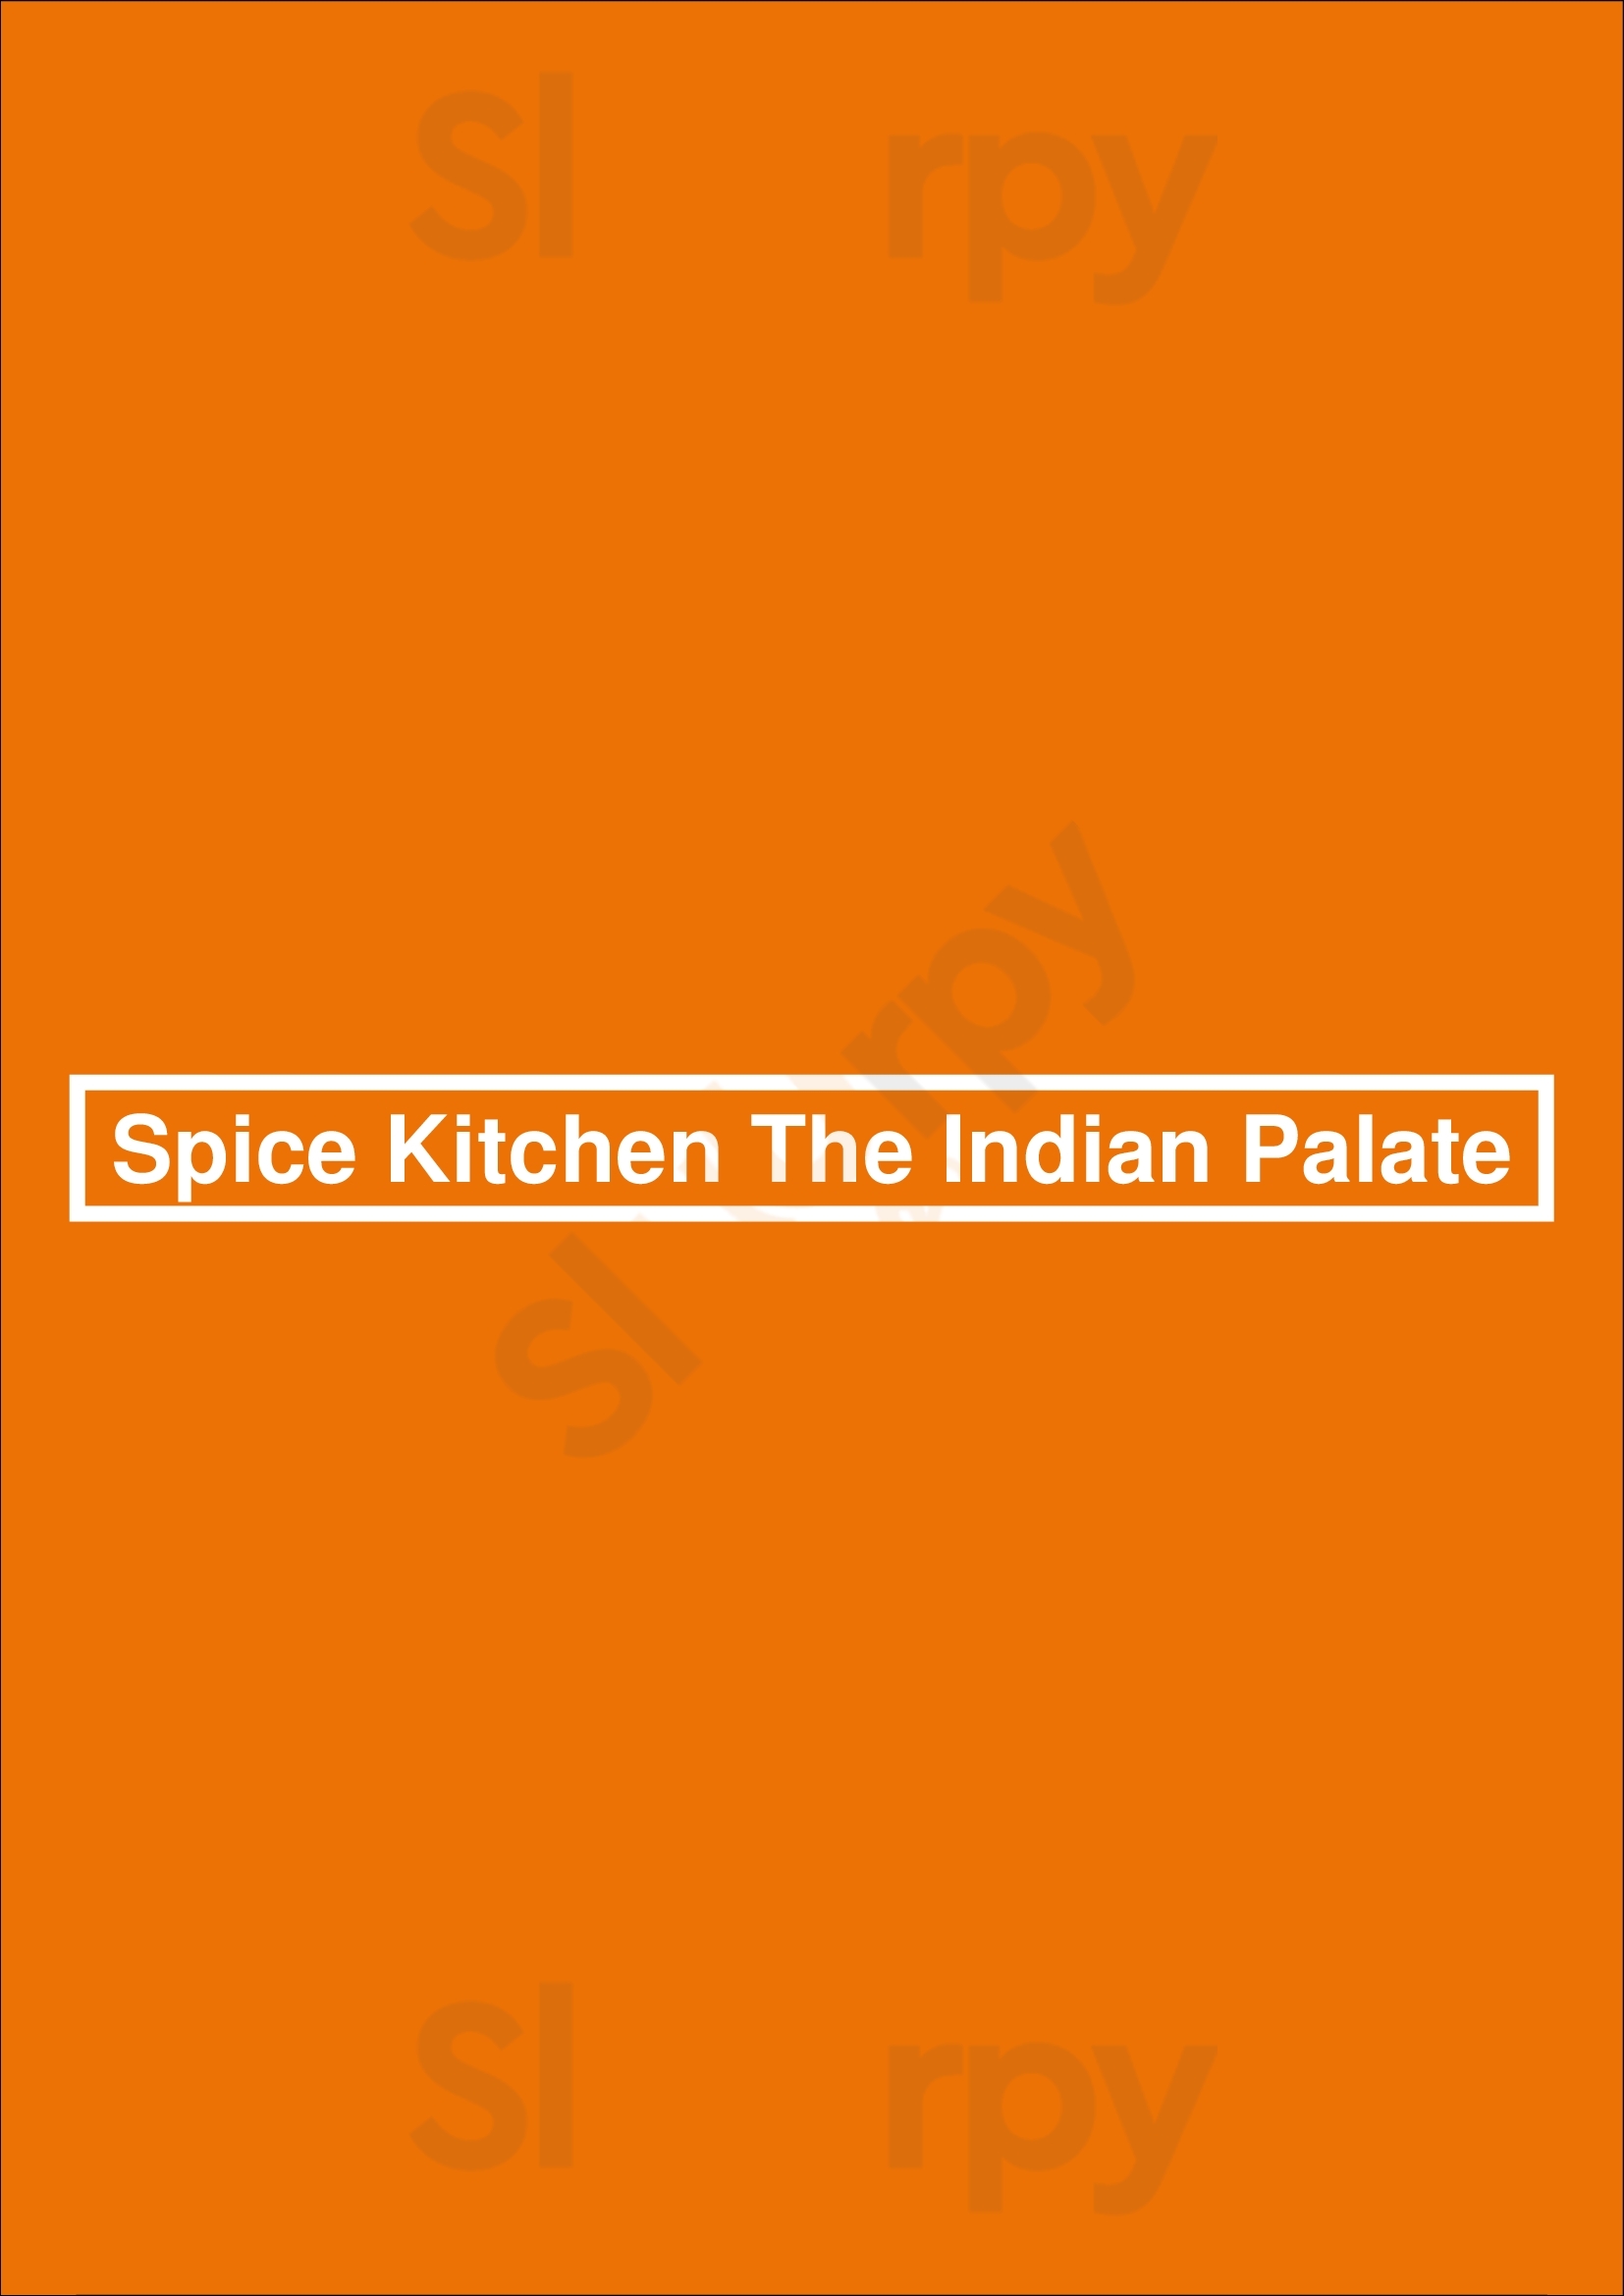 Spice Kitchen The Indian Palate Abbotsford Menu - 1